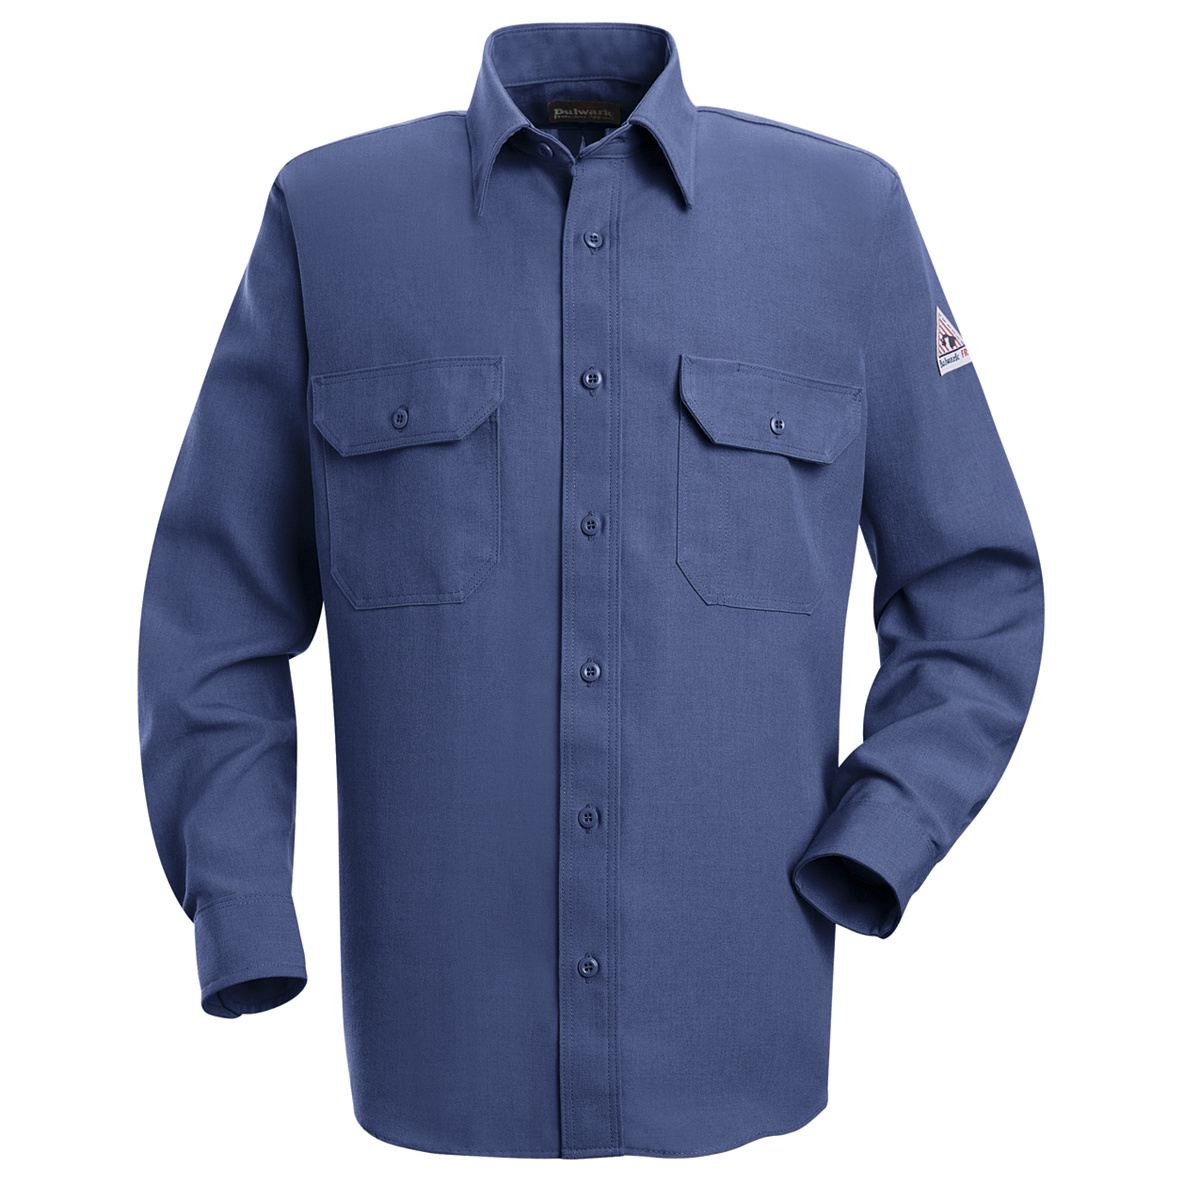 Bulwark® X-Large Regular Gulf Blue Nomex® IIIA/Nomex® Aramid/Kevlar® Aramid Flame Resistant Uniform Shirt With Button Front Clos